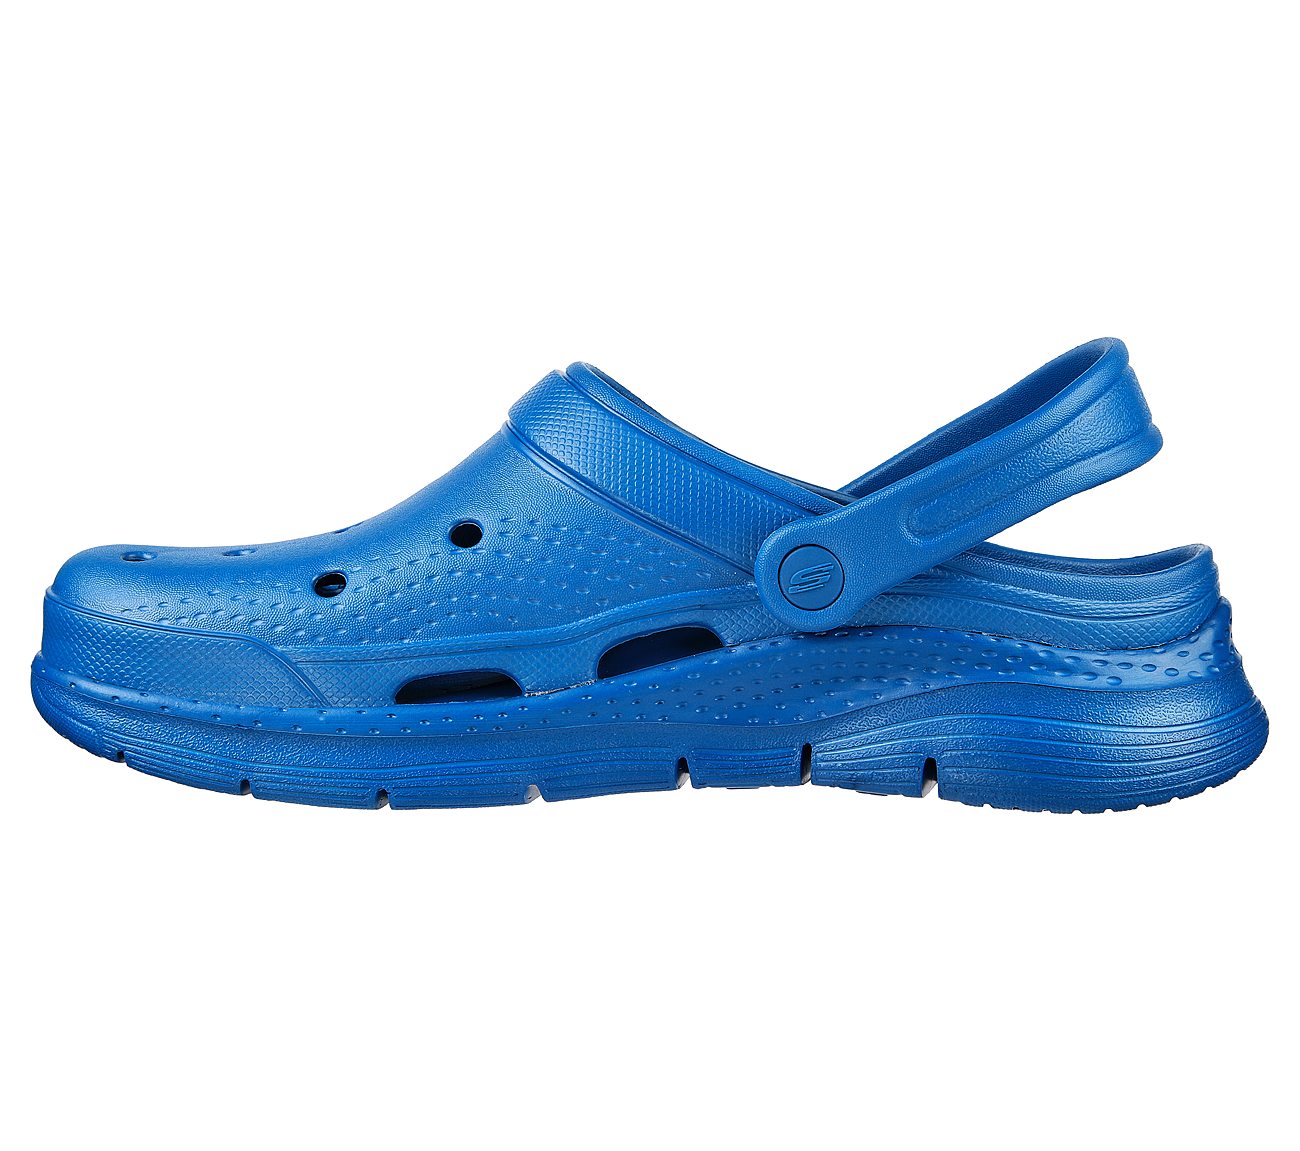 ARCH FIT - VALIANT, BLUE Footwear Left View